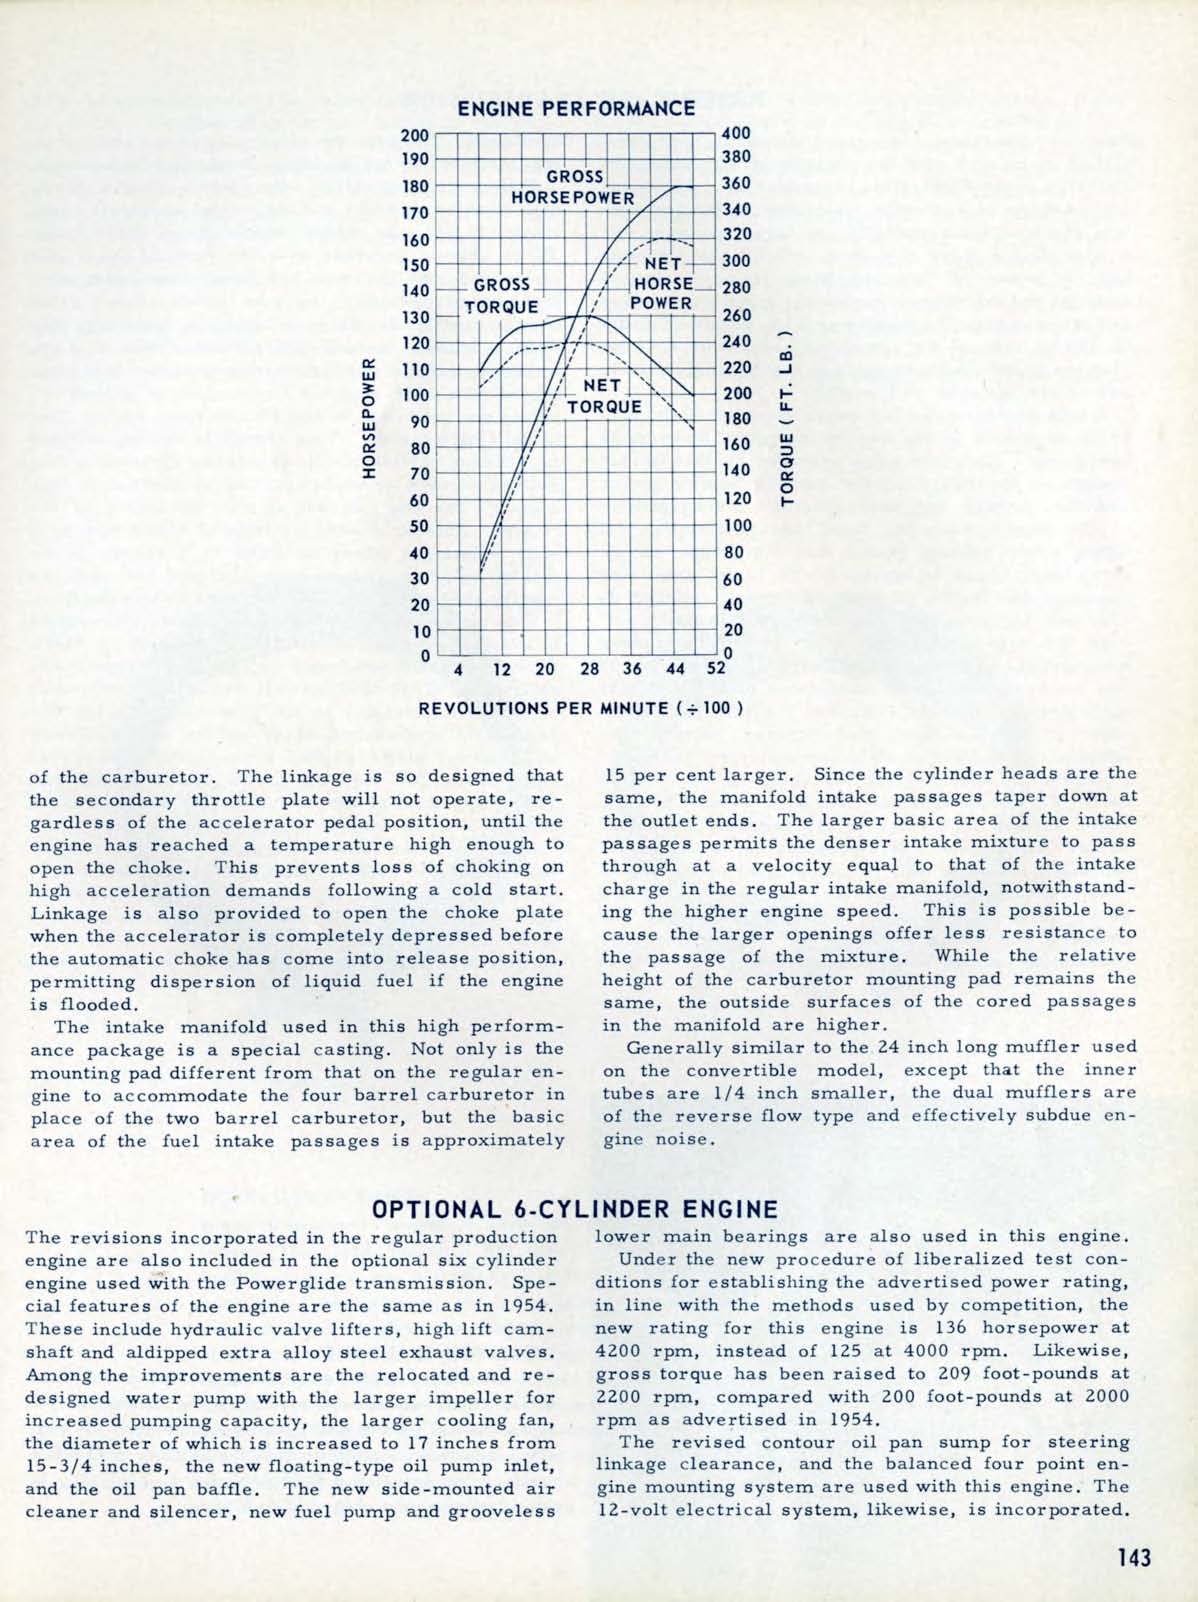 1955_Chevrolet_Engineering_Features-143